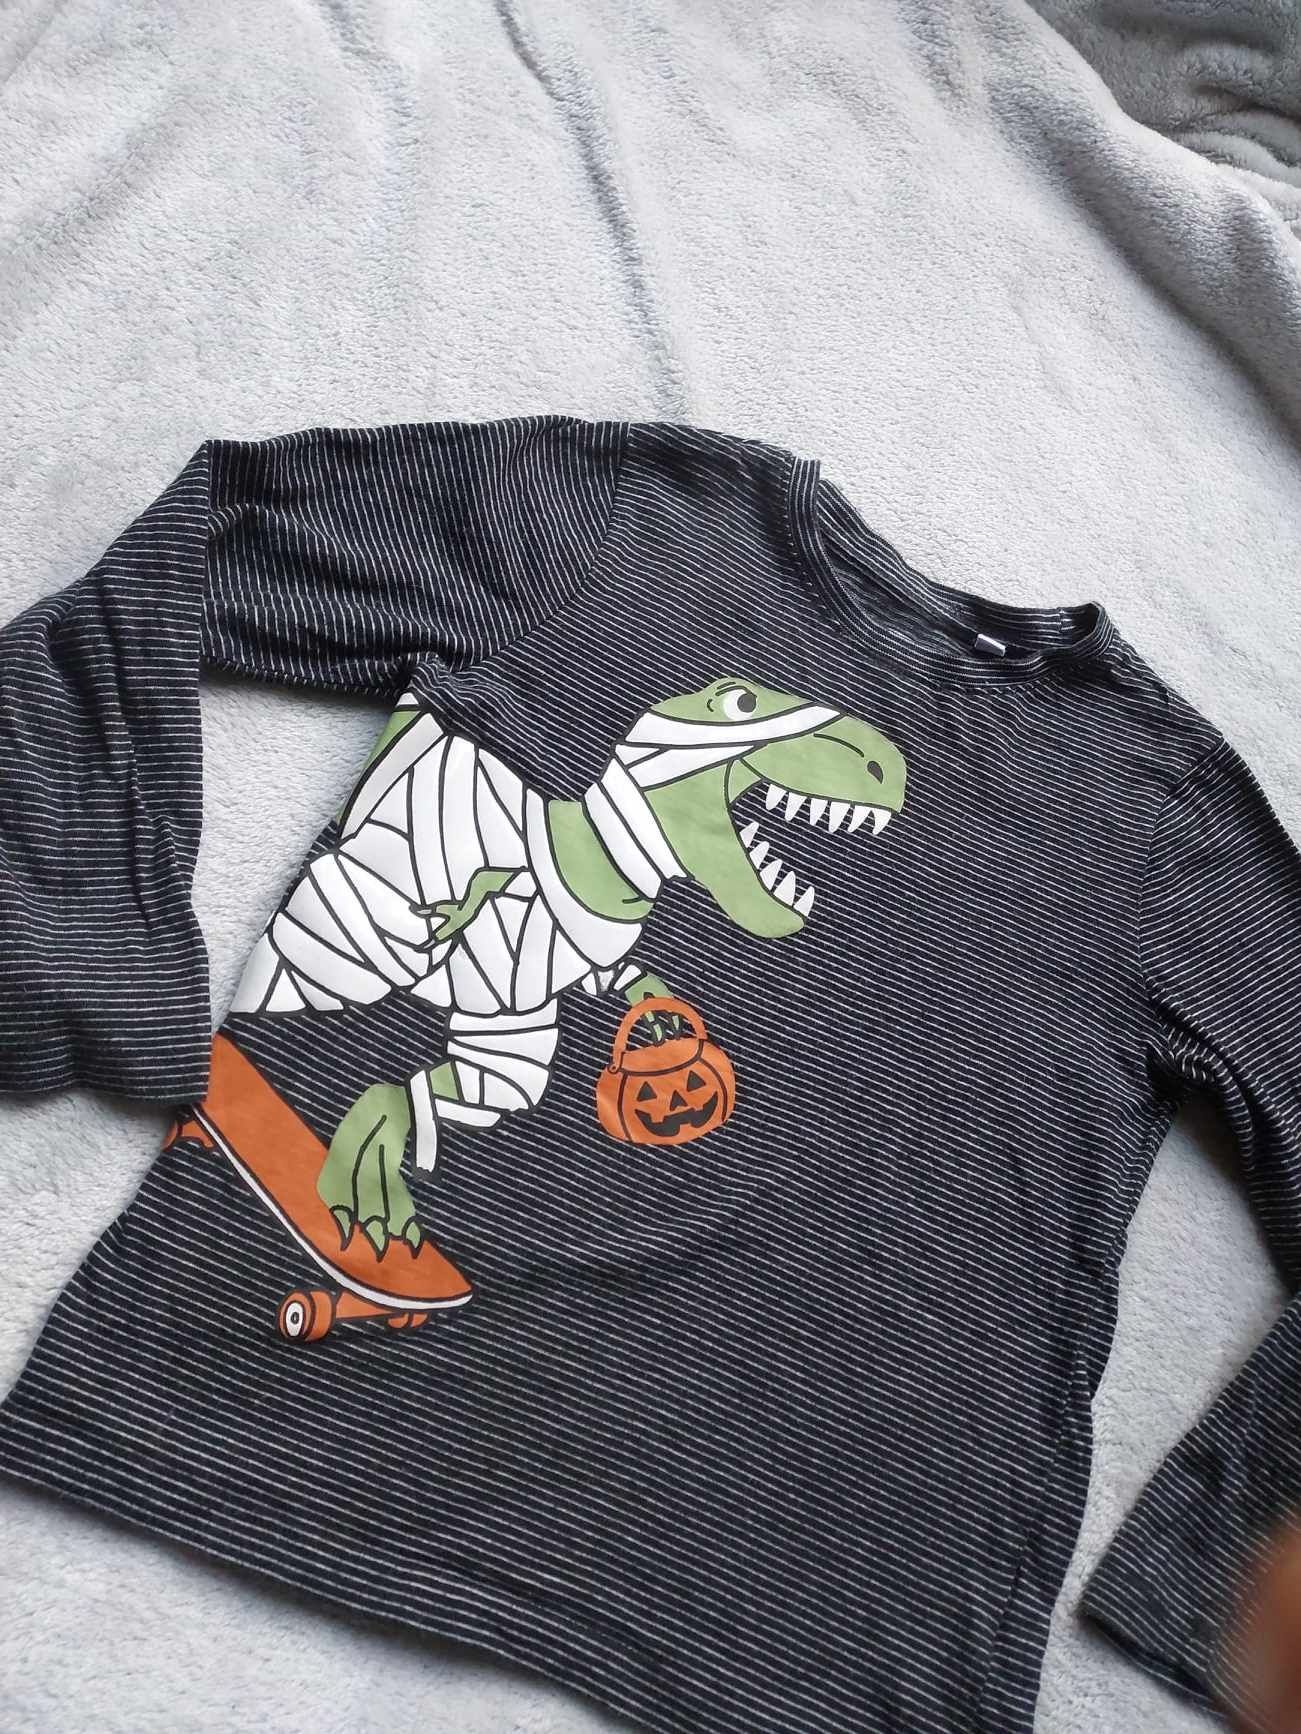 Bluzka koszulka dinozaur 104